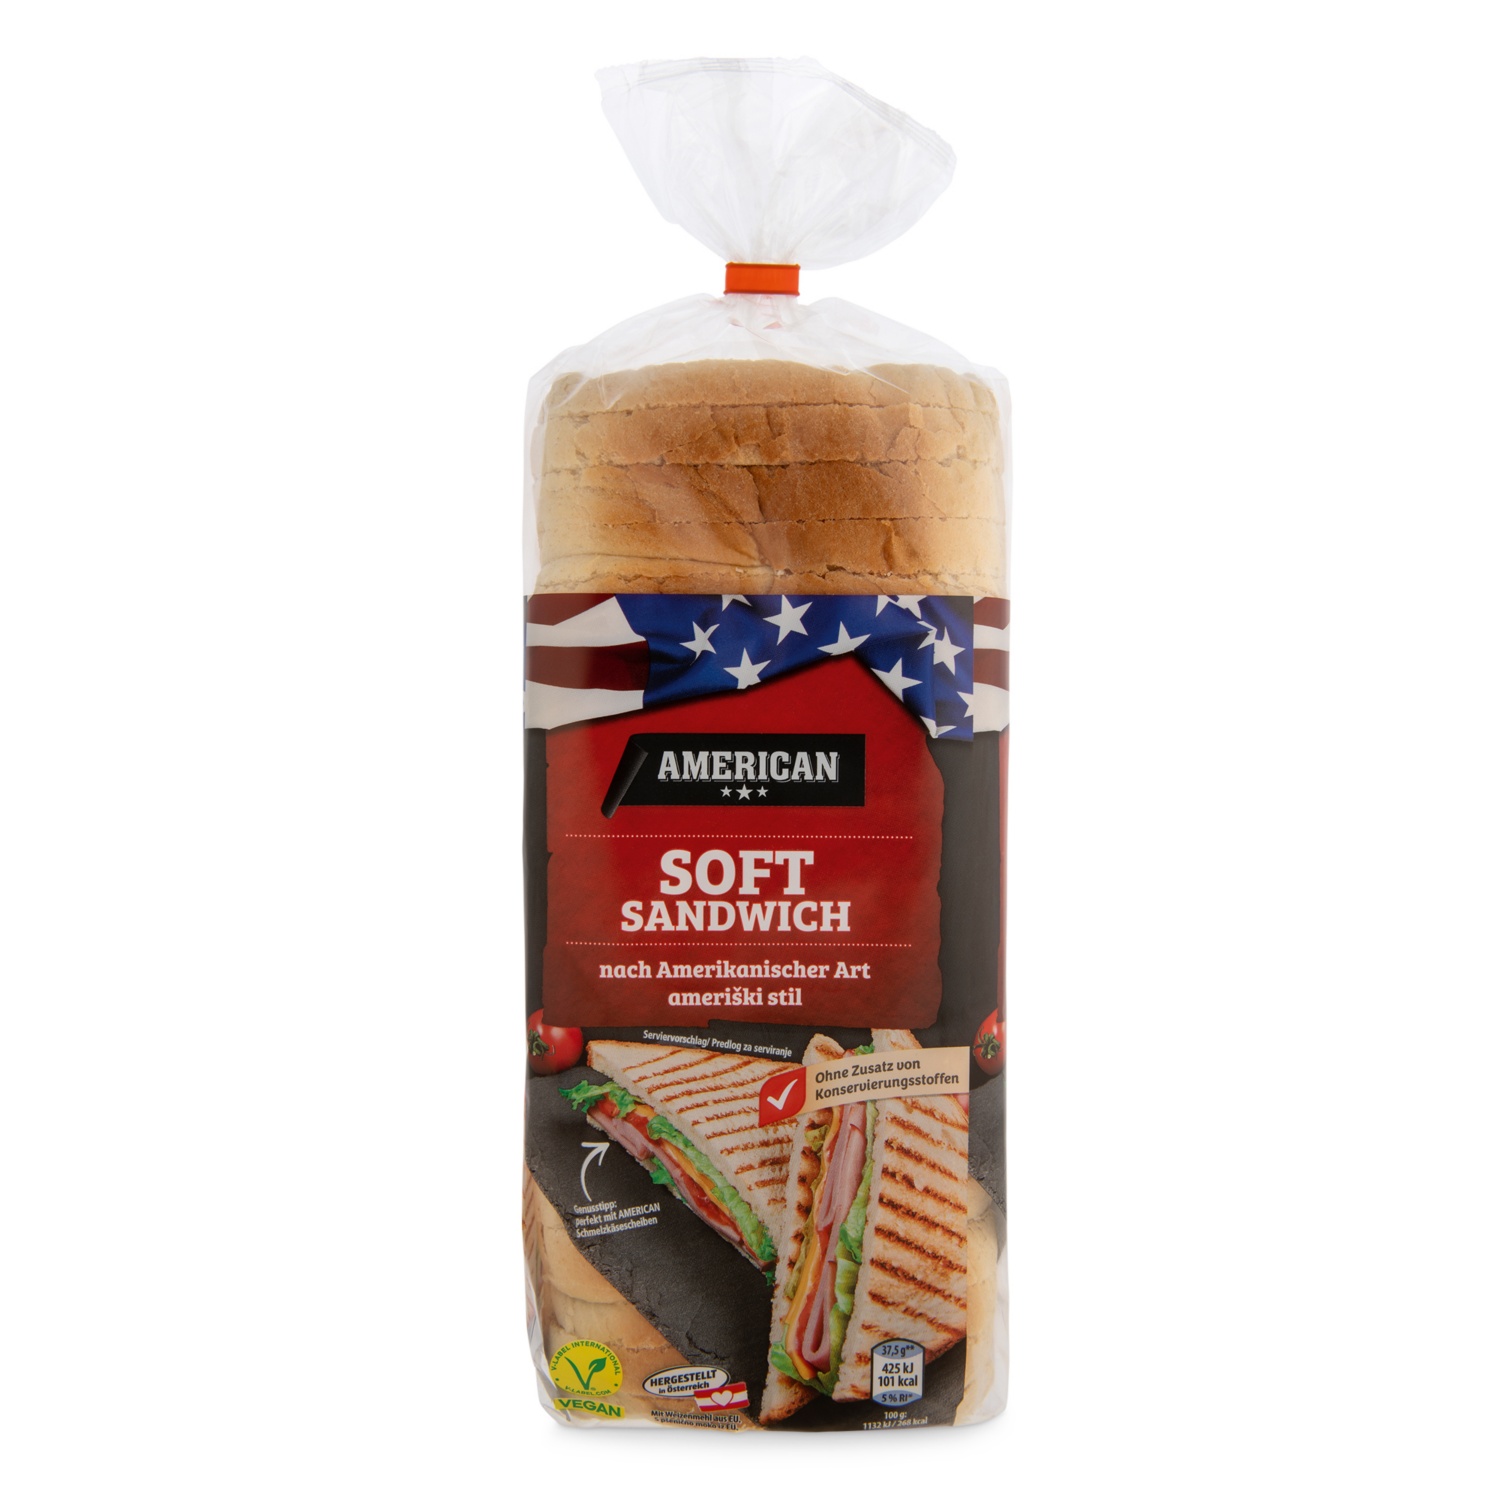 AMERICAN Sandwich